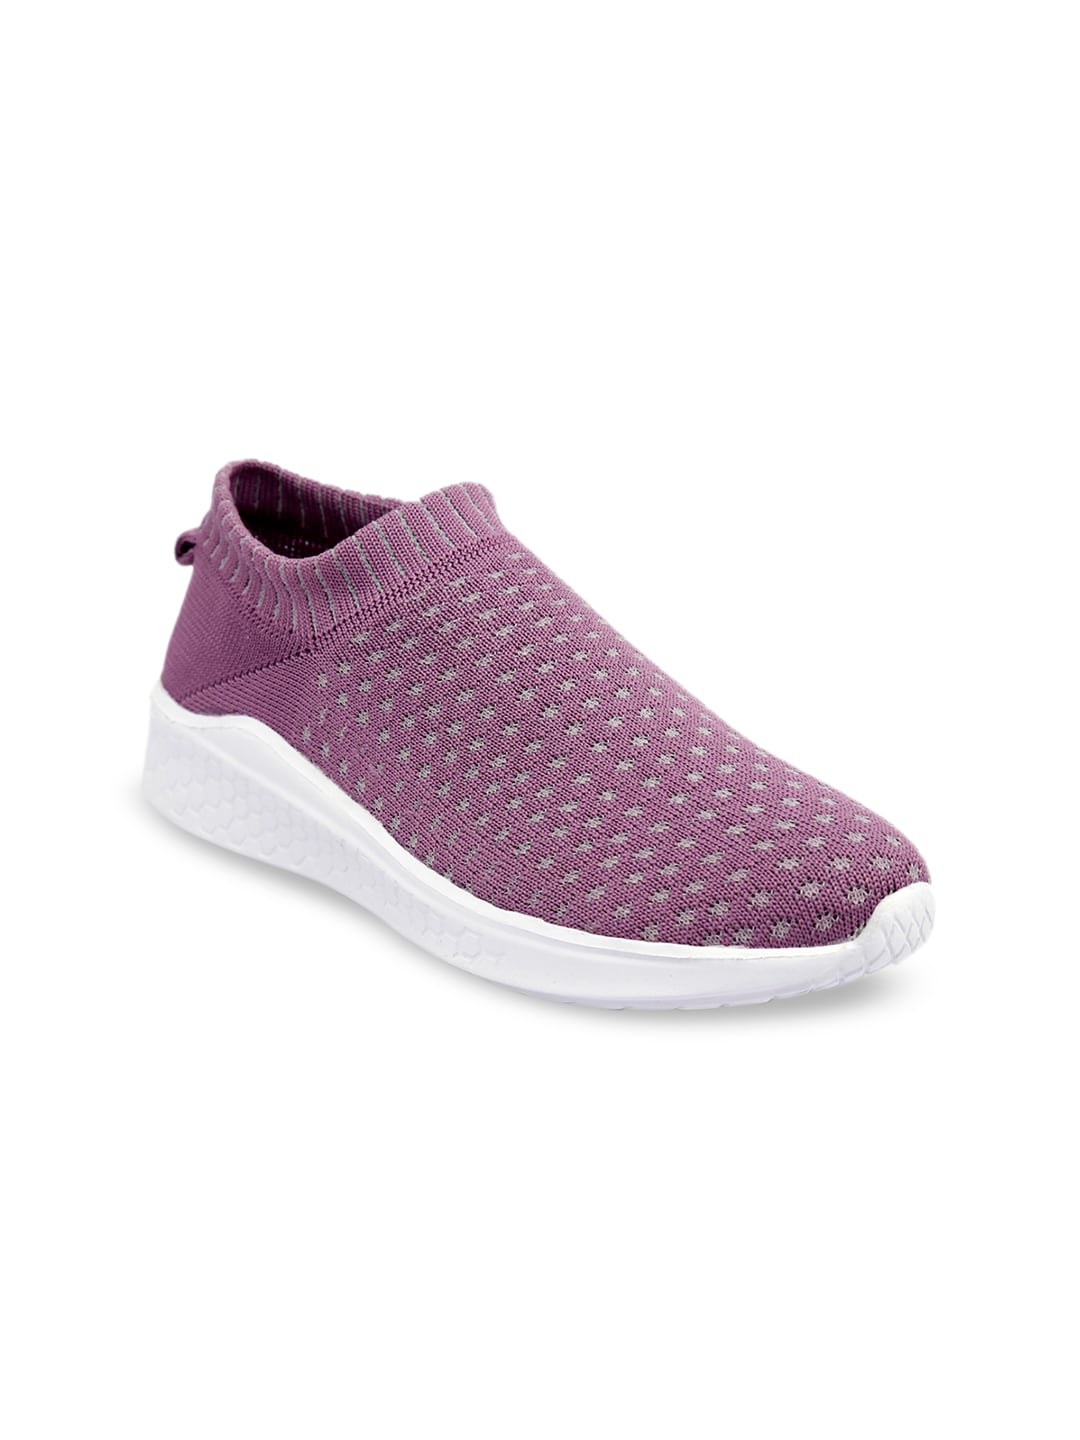 meriggiare Women Lavender Mesh Flyknit Running Shoes Price in India